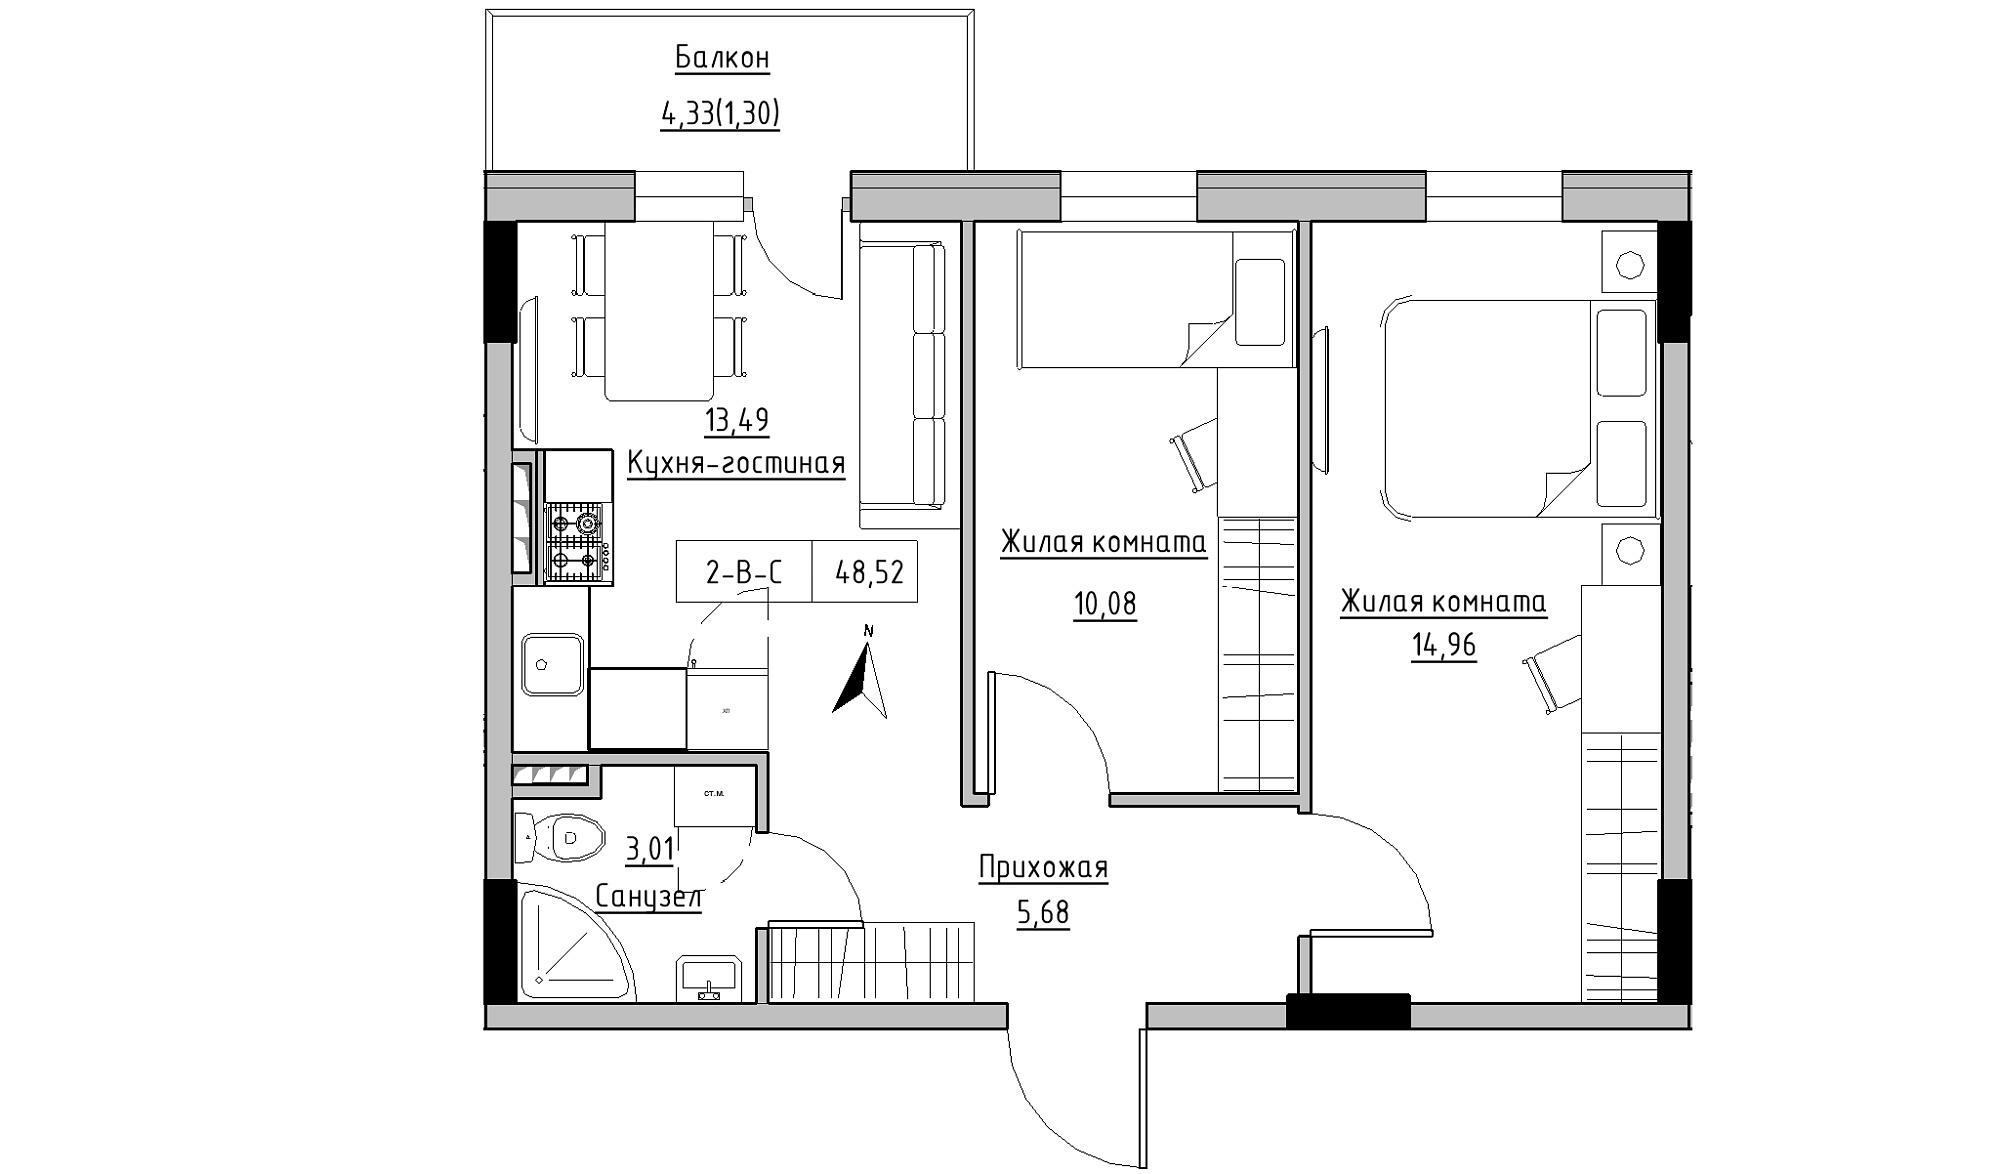 Planning 2-rm flats area 48.52m2, KS-025-03/0009.